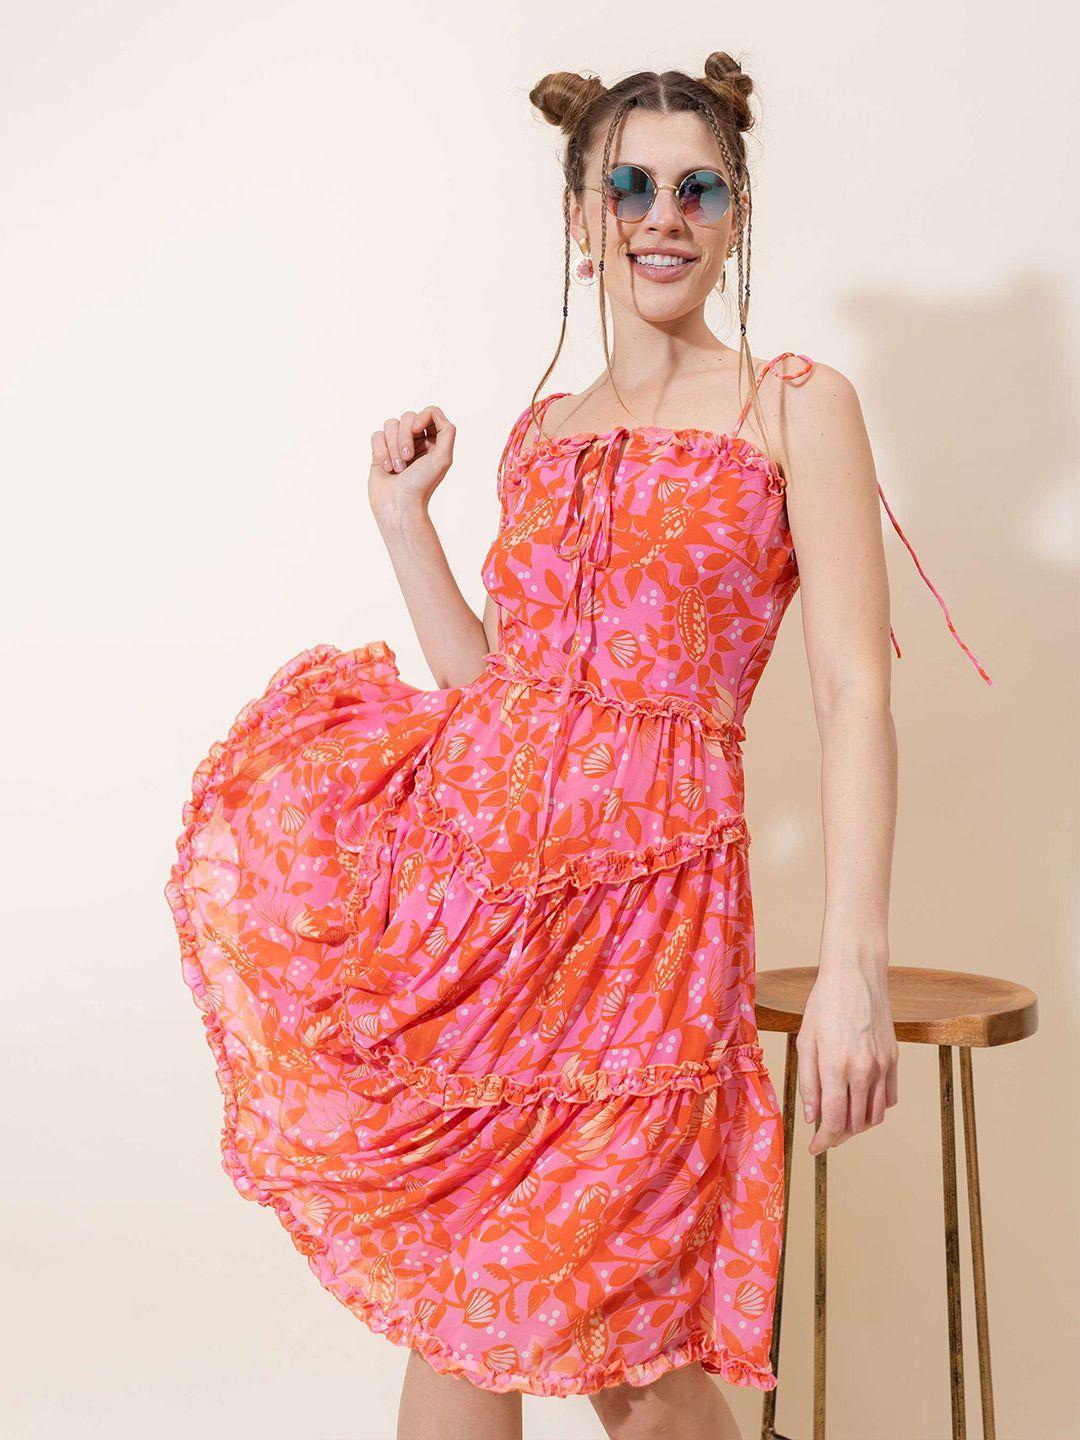 stylecast x hersheinbox pink & orange floral printed tiered georgette fit & flare dress